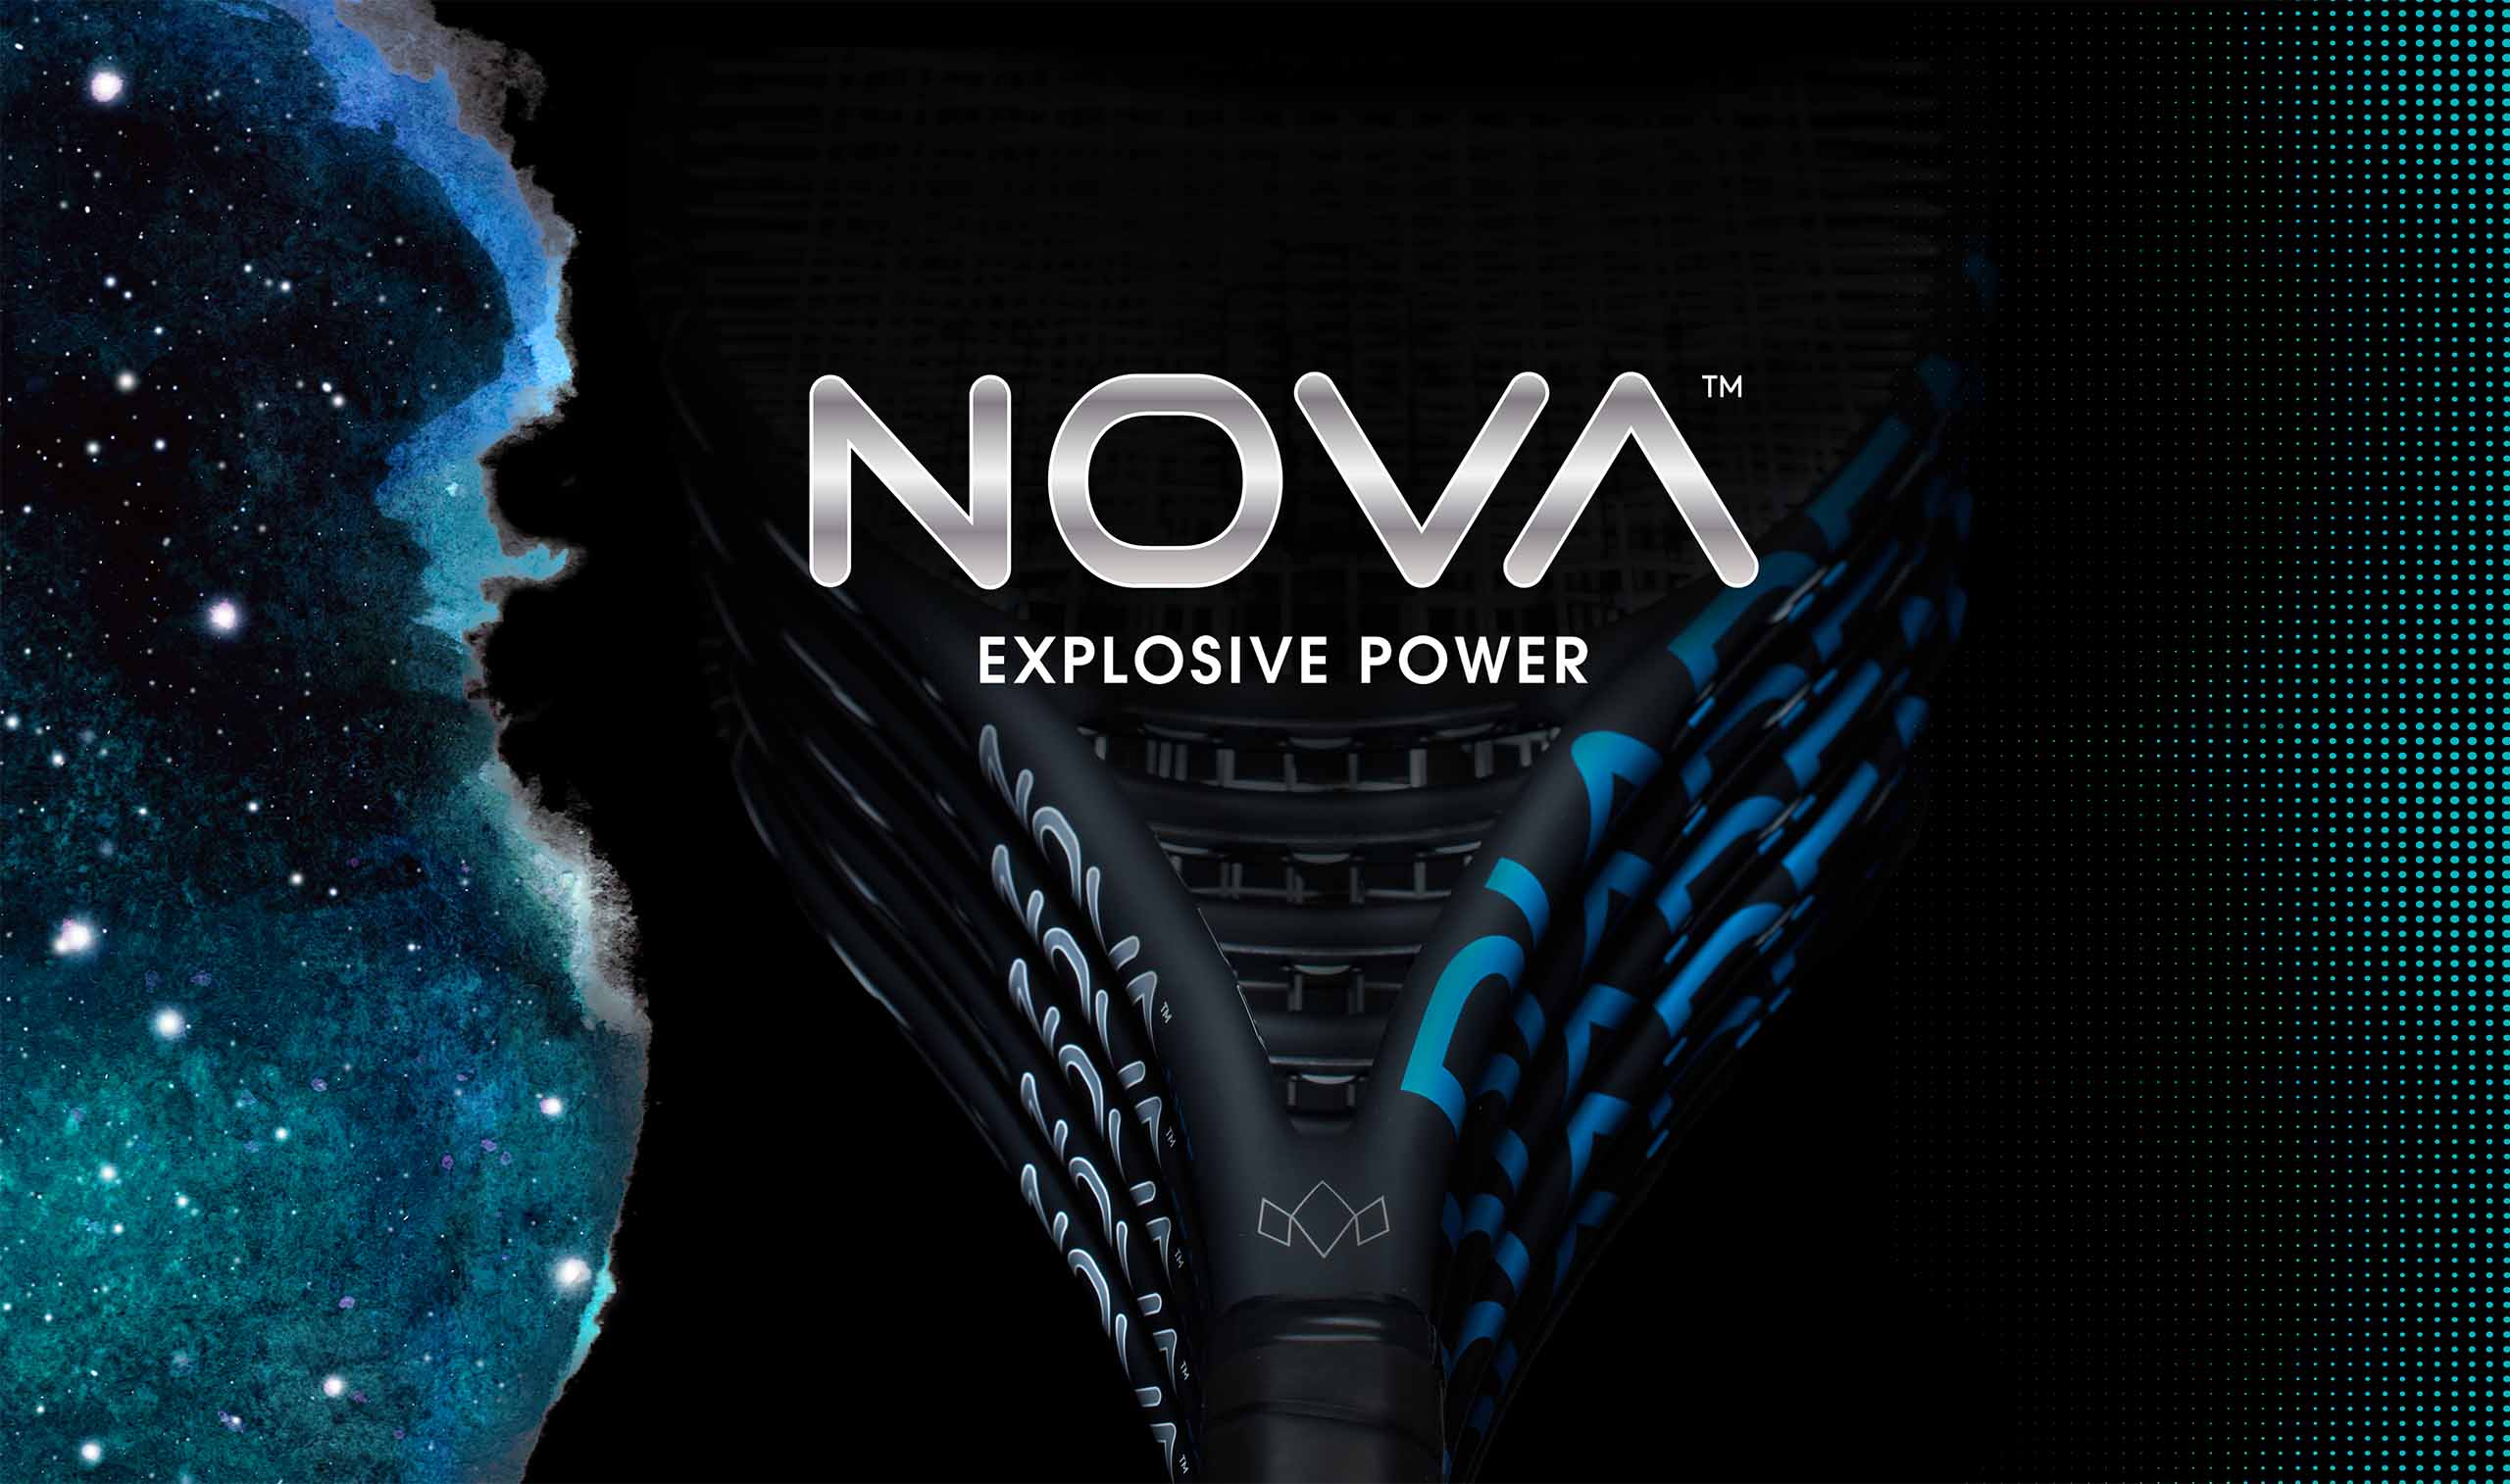 Nova Explosive Power